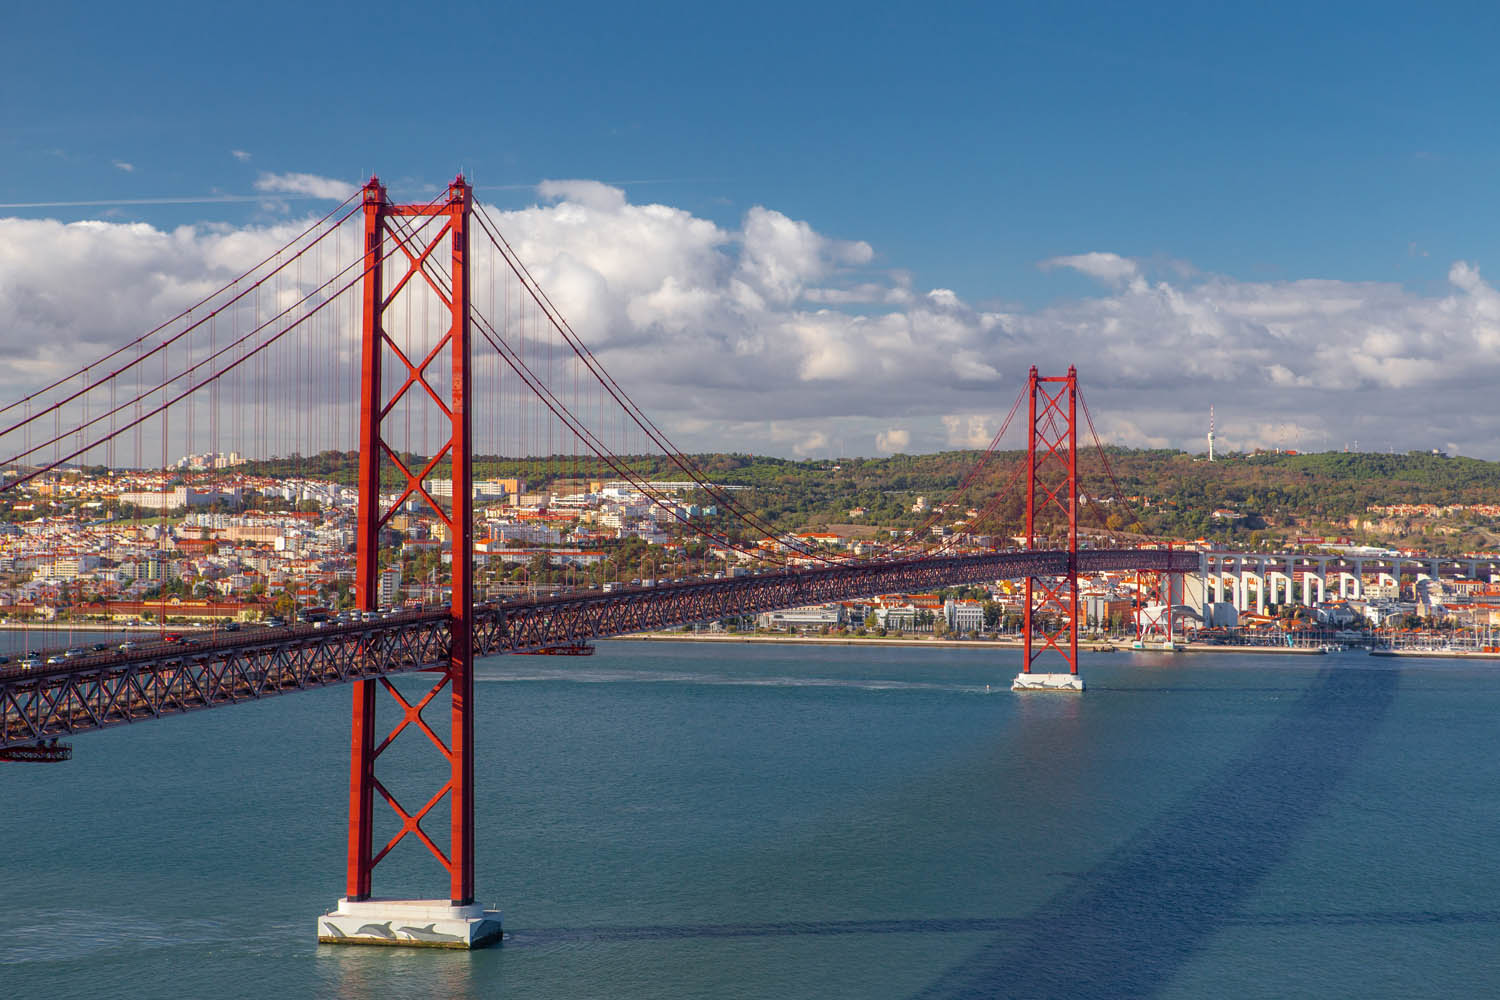 Rode brug in Lissabon over de rivier met Lissabon op de achtergrond.